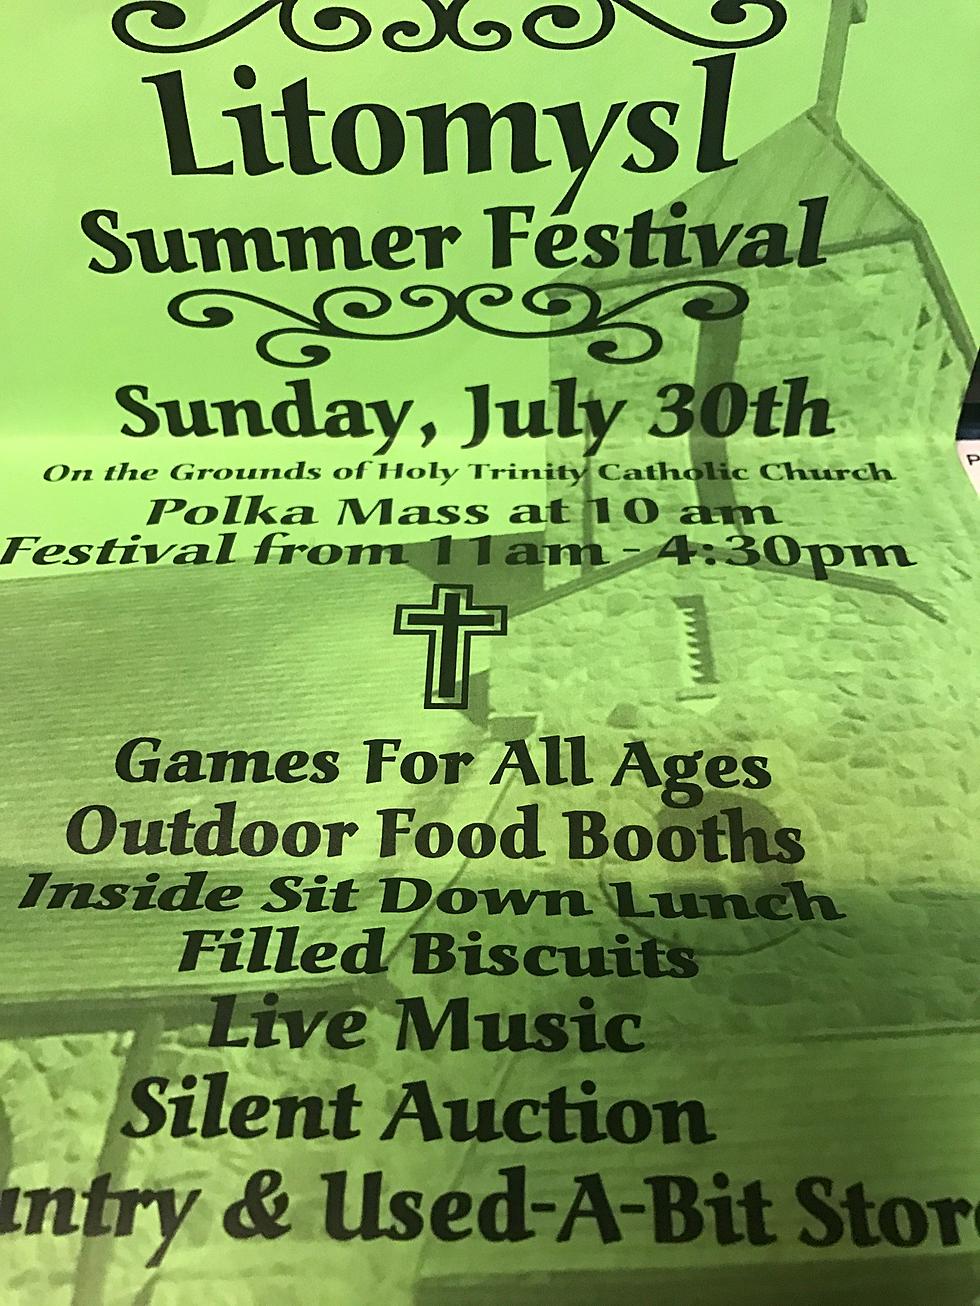 Litomysl Summer Festival Details on AM Minnesota 7-24-17